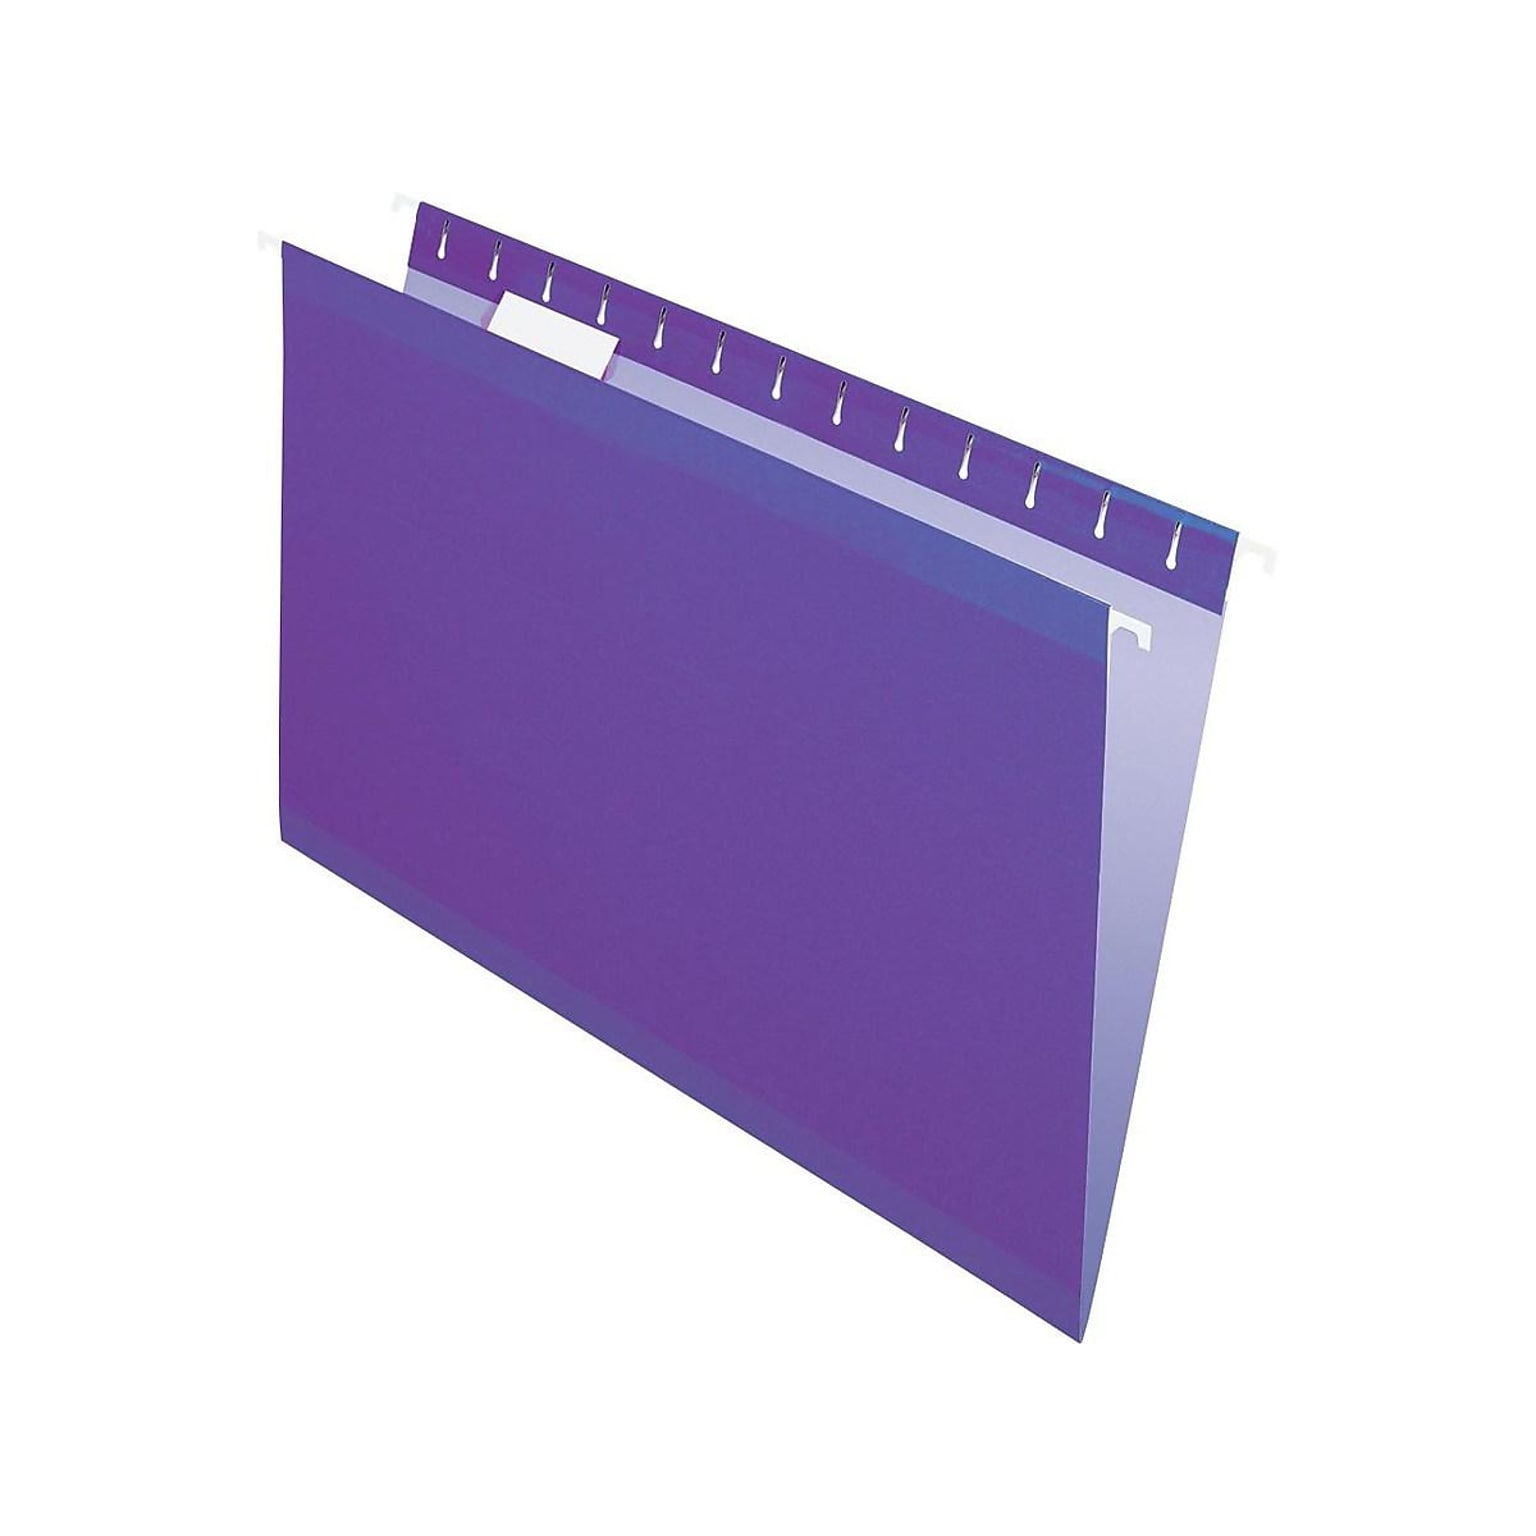 Pendaflex Recycled Hanging File Folders, Legal Size, Violet, 25/Box (PFX 4153 1/5 VIO)